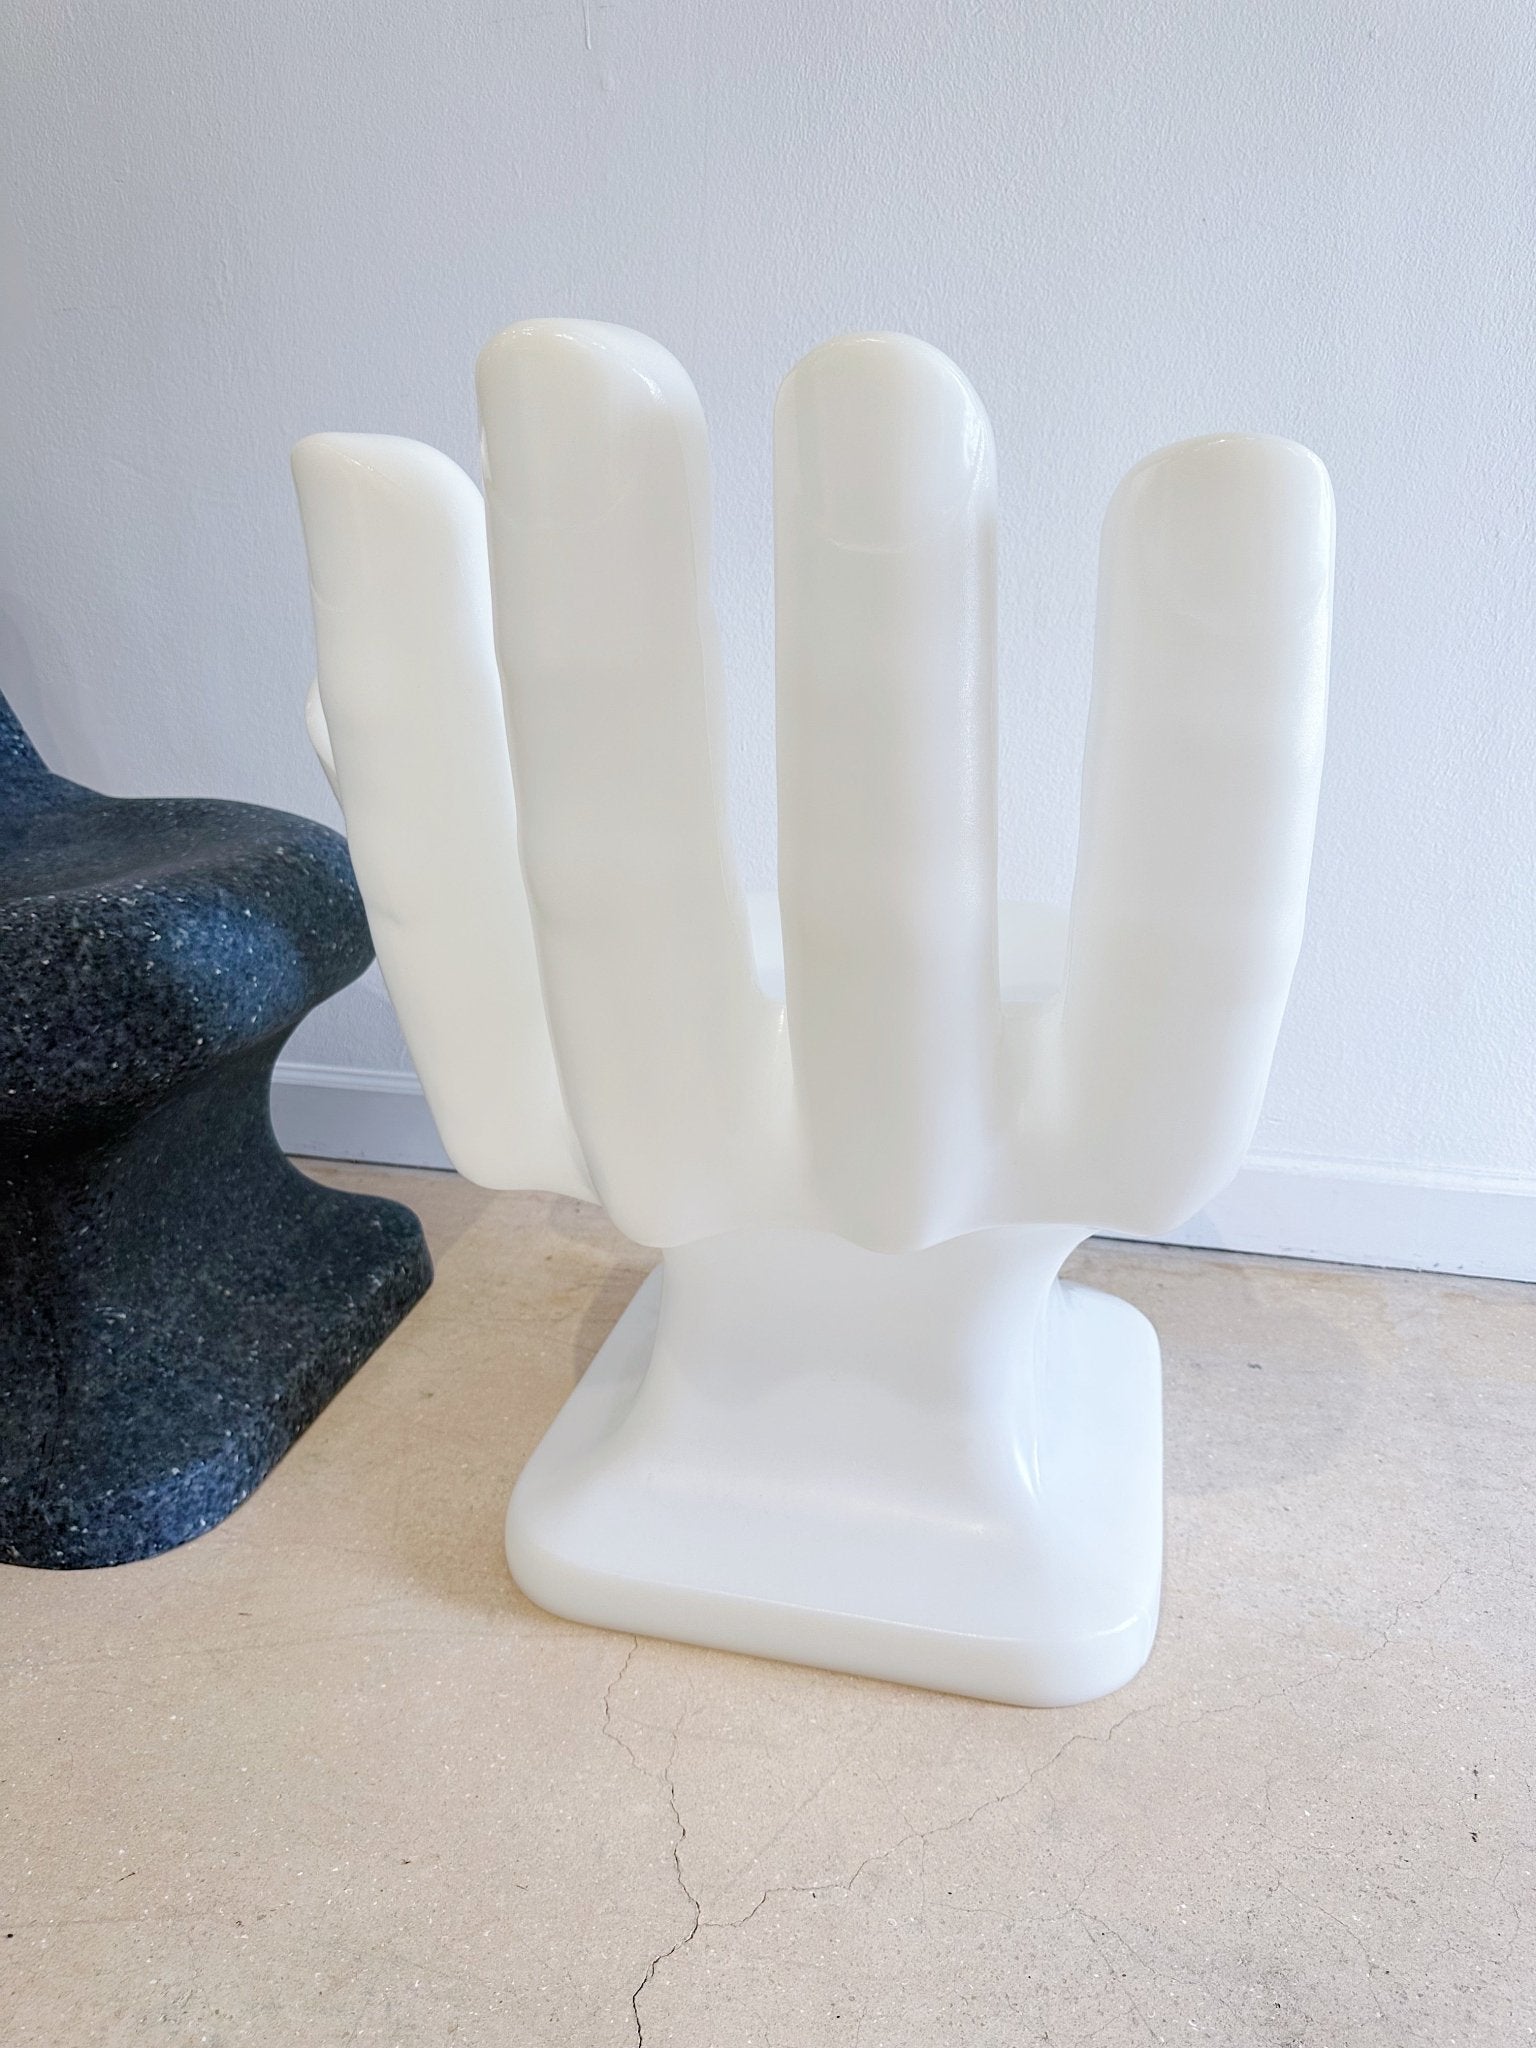 Resin Hand Chair - Rehaus